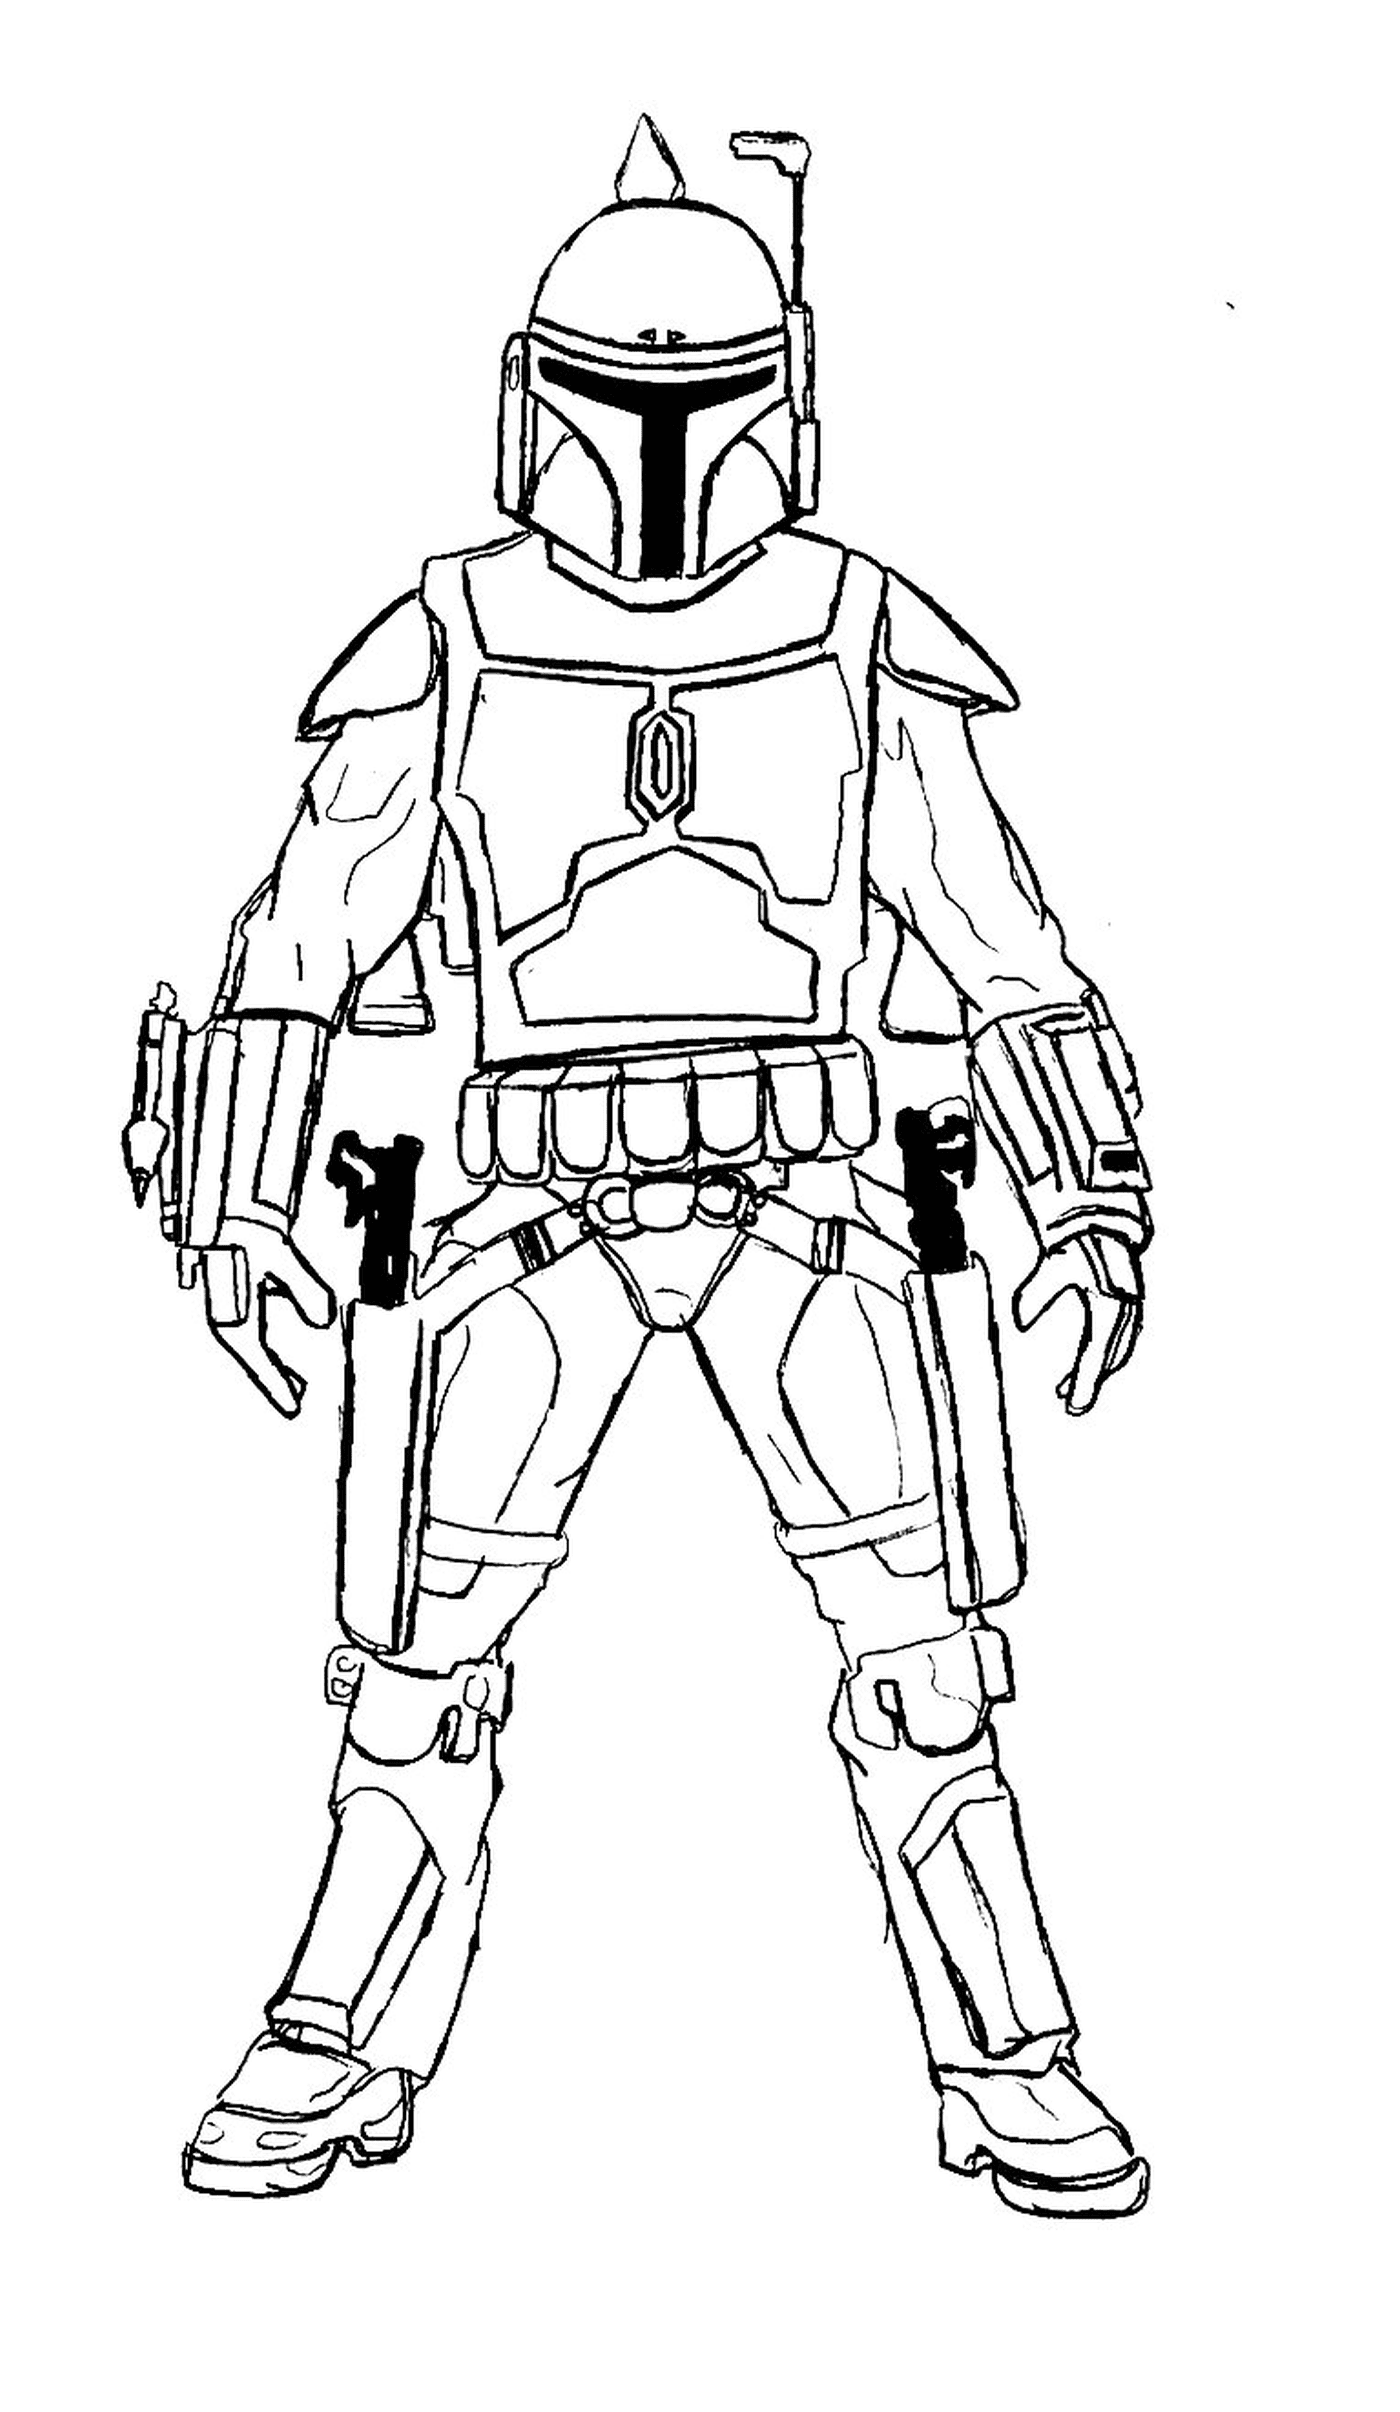   Clone trooper de Star Wars 